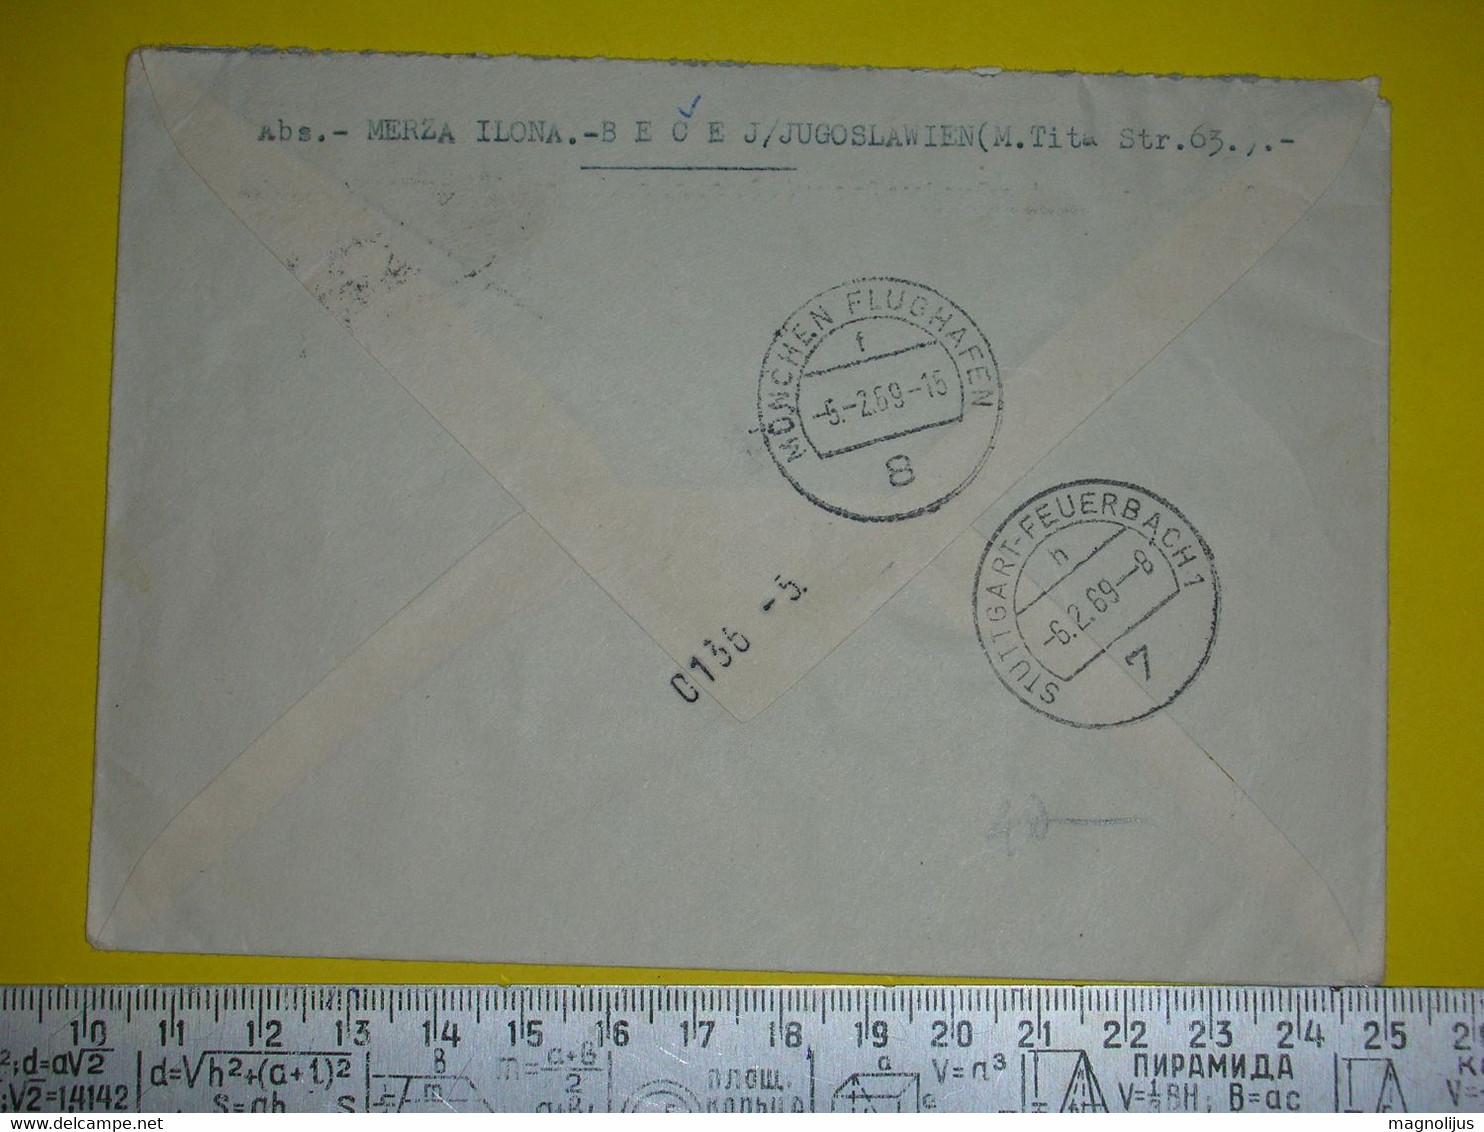 R,Yugoslavia Air Mail Cover,par Avion Postal Label,Tito Stamps,Airmail Letter,R & Urgent Postal Labels,rare Violet Seals - Luchtpost